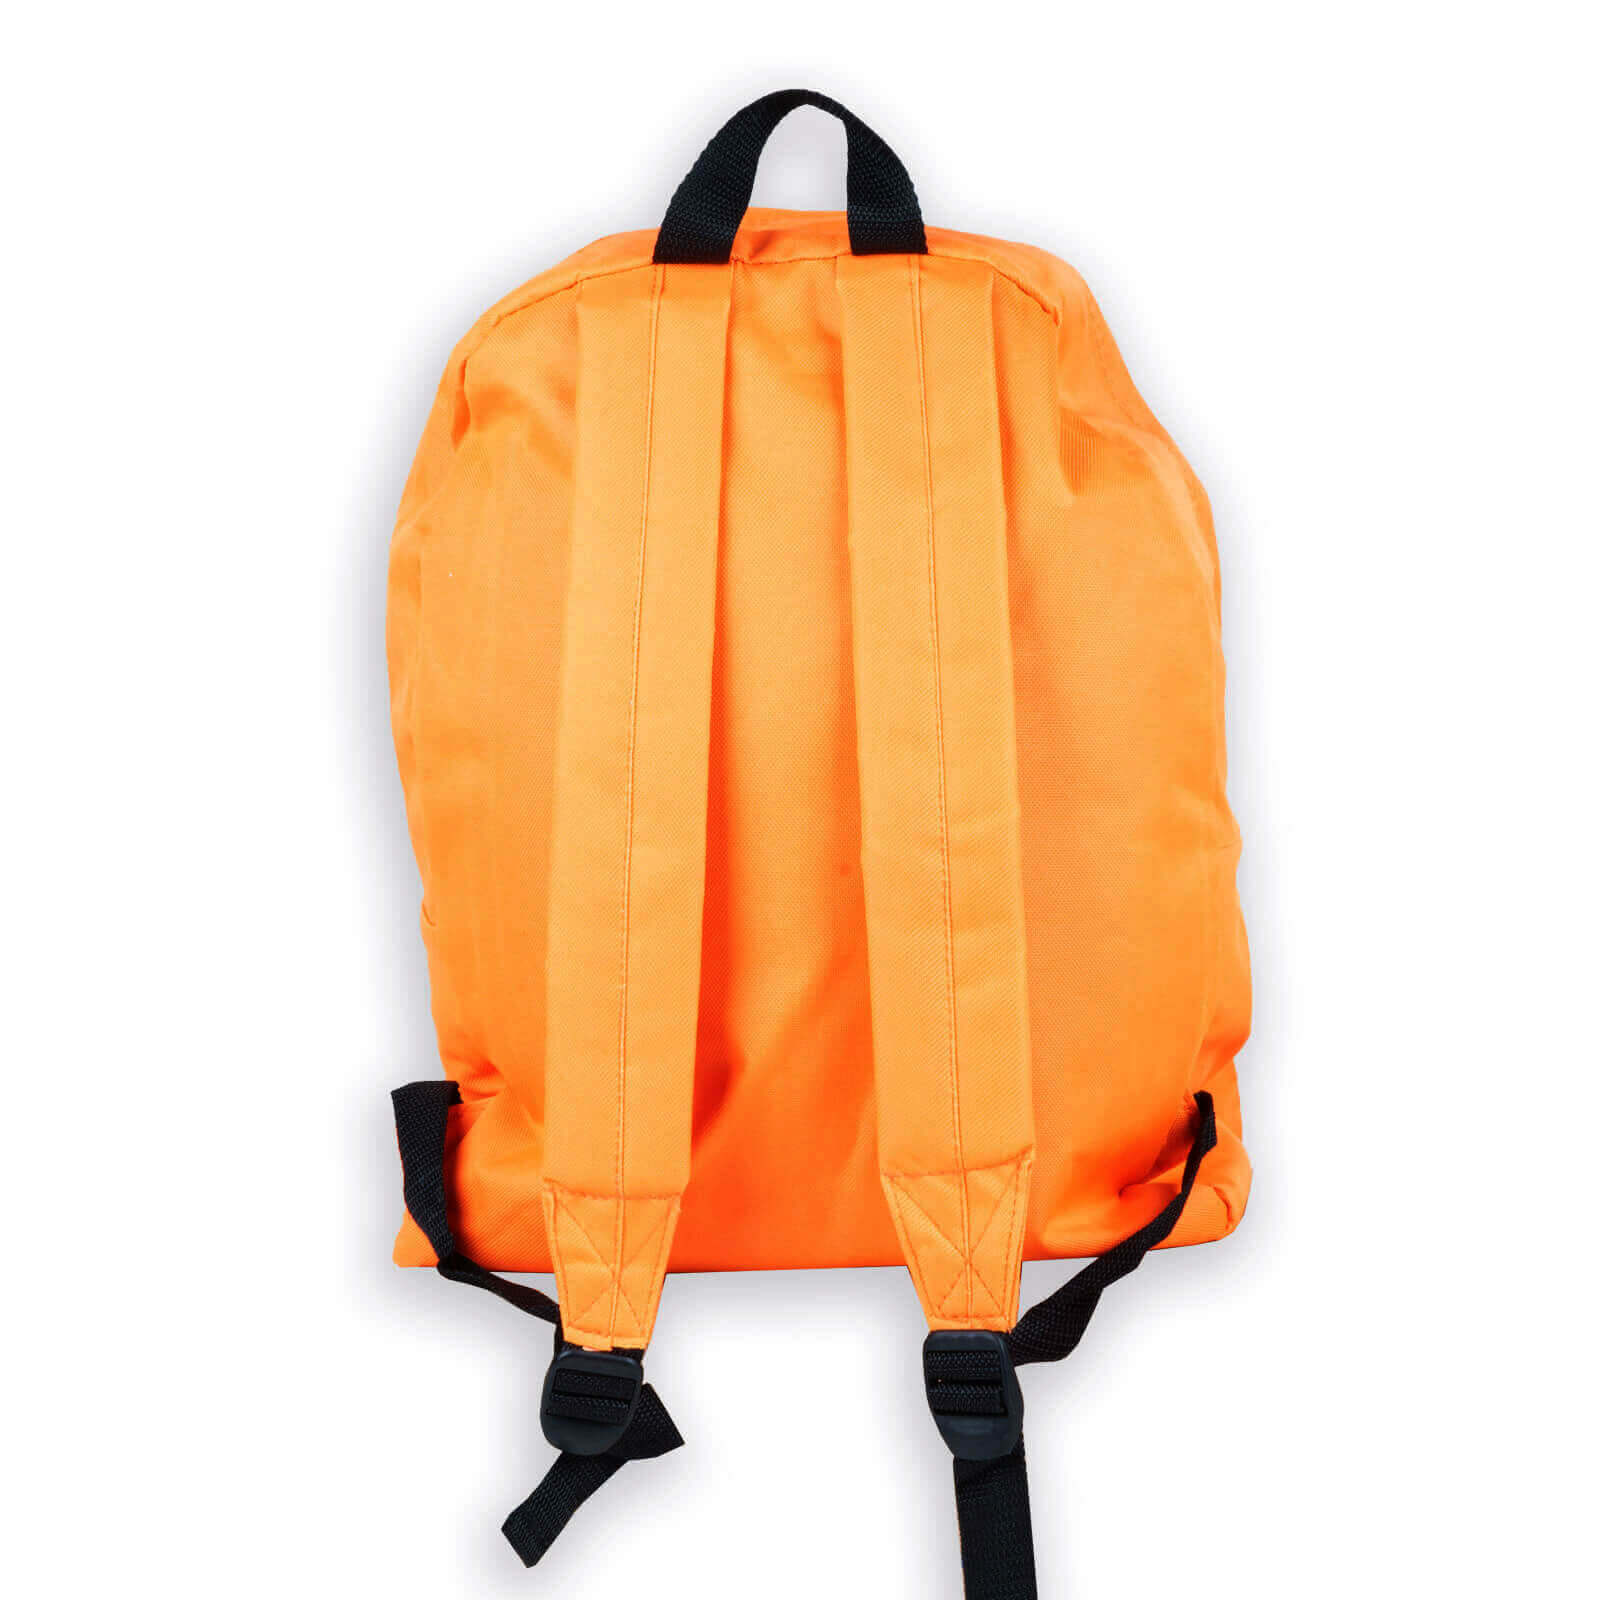 Backpack, Orange - Motive FIH Women's World Cup